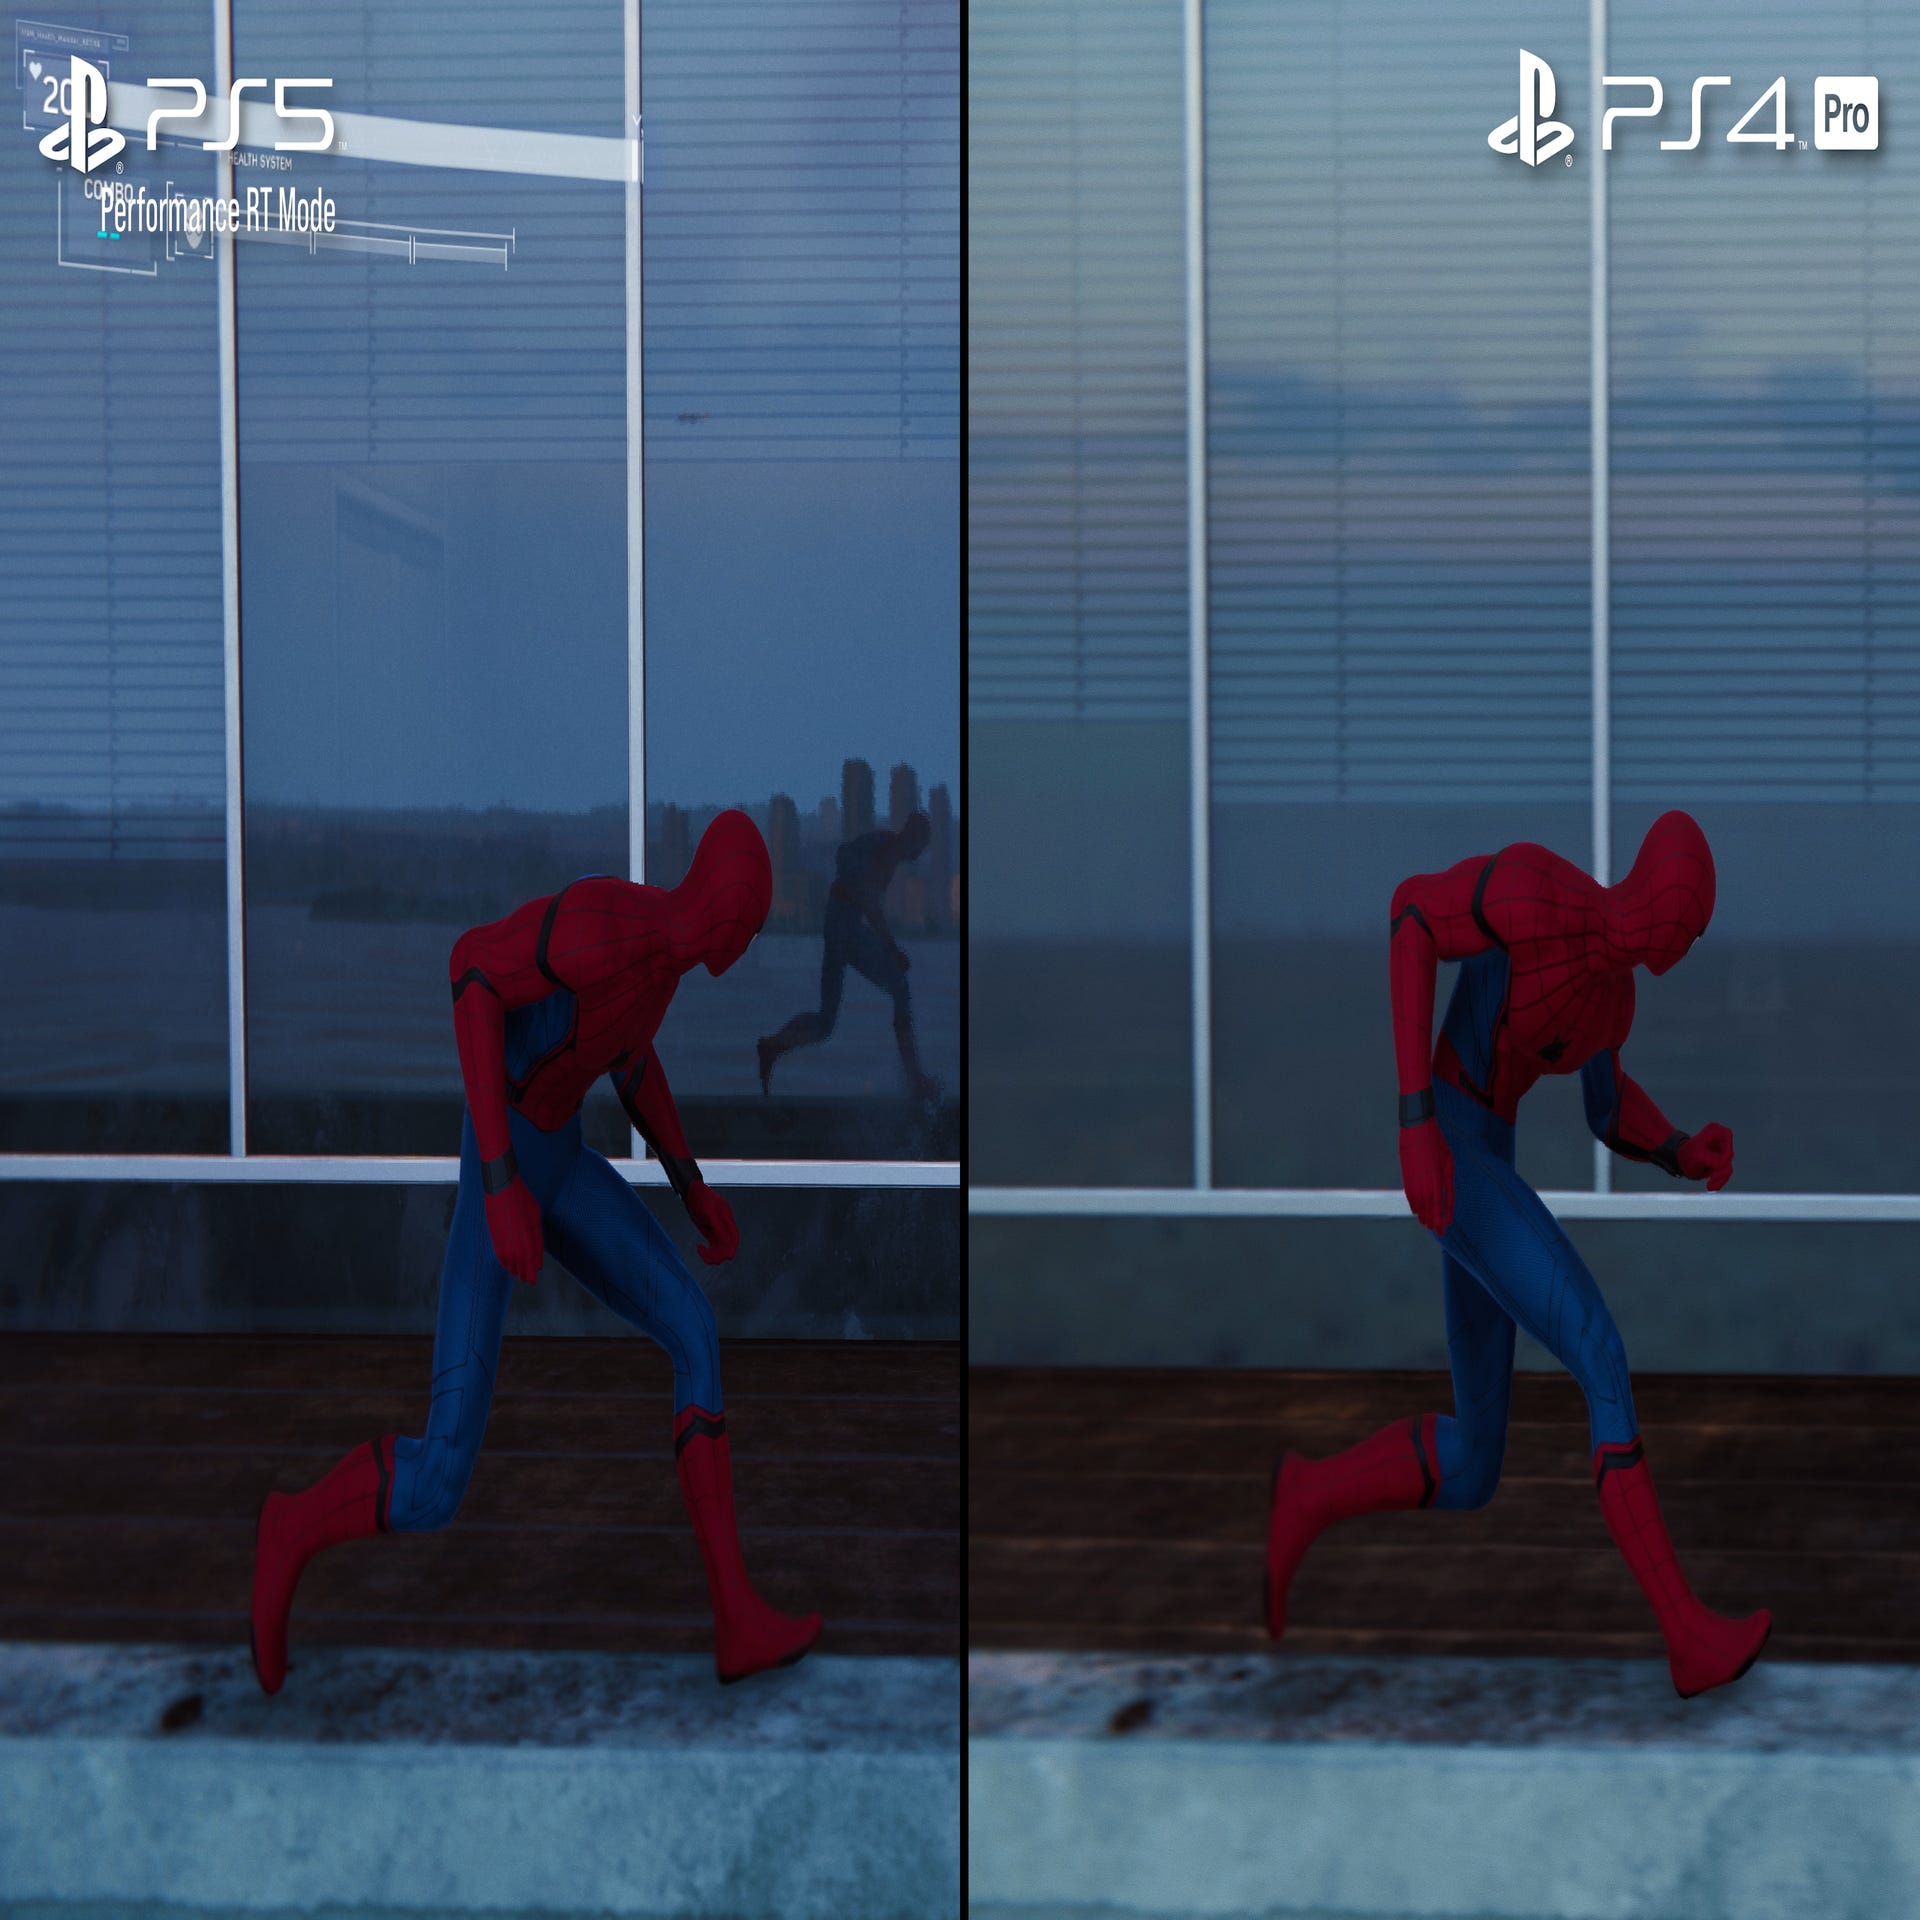 Marvel's Spider-Man Remastered: melhorias substanciais vs PS4 Pro